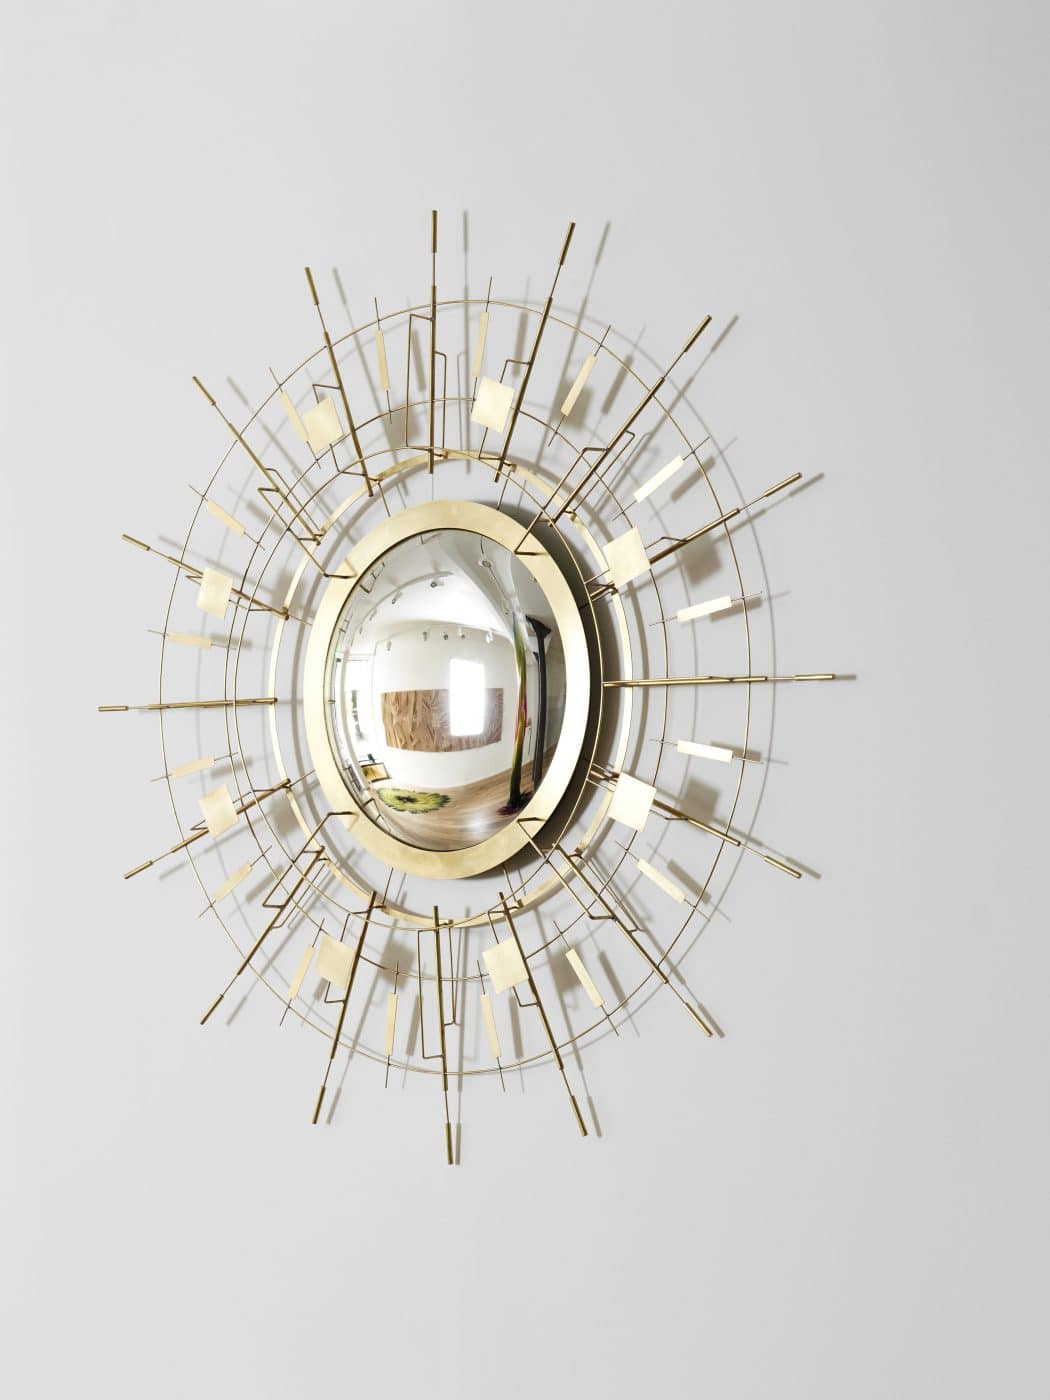 A brass sunburst mirror by Éric de Dormael at Galerie Negropontes